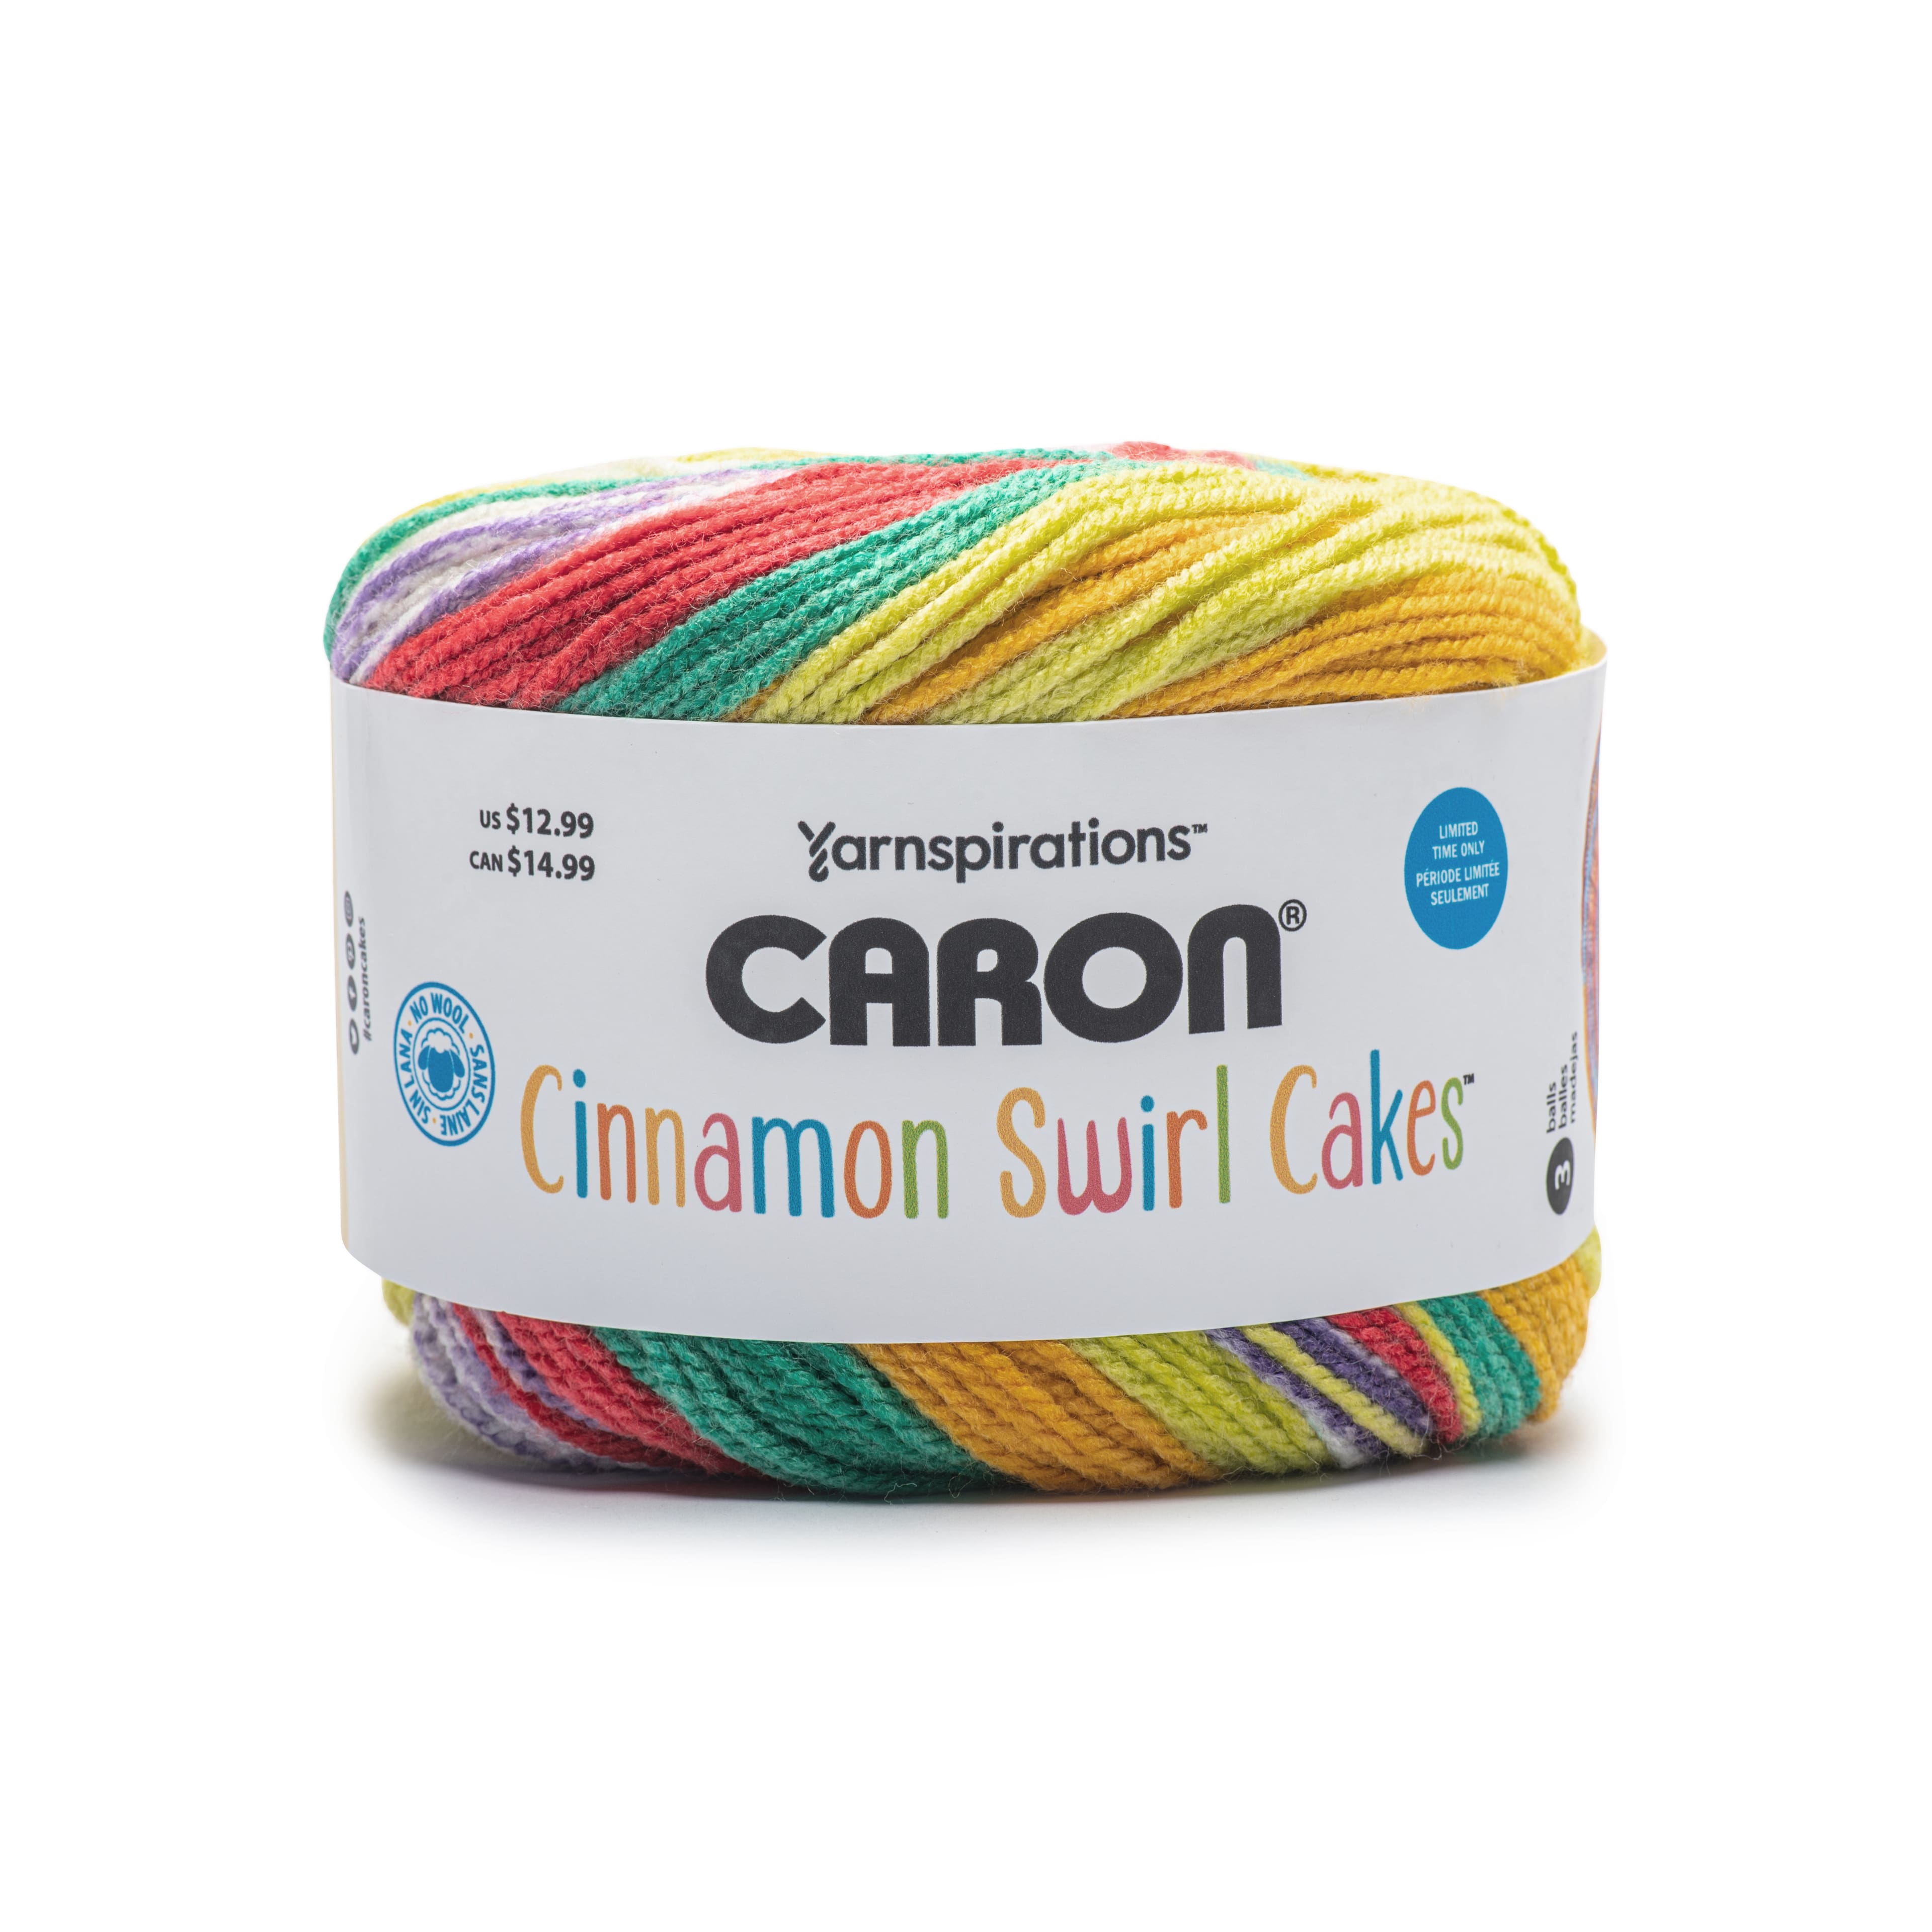 Cinnamon Caron Cake 